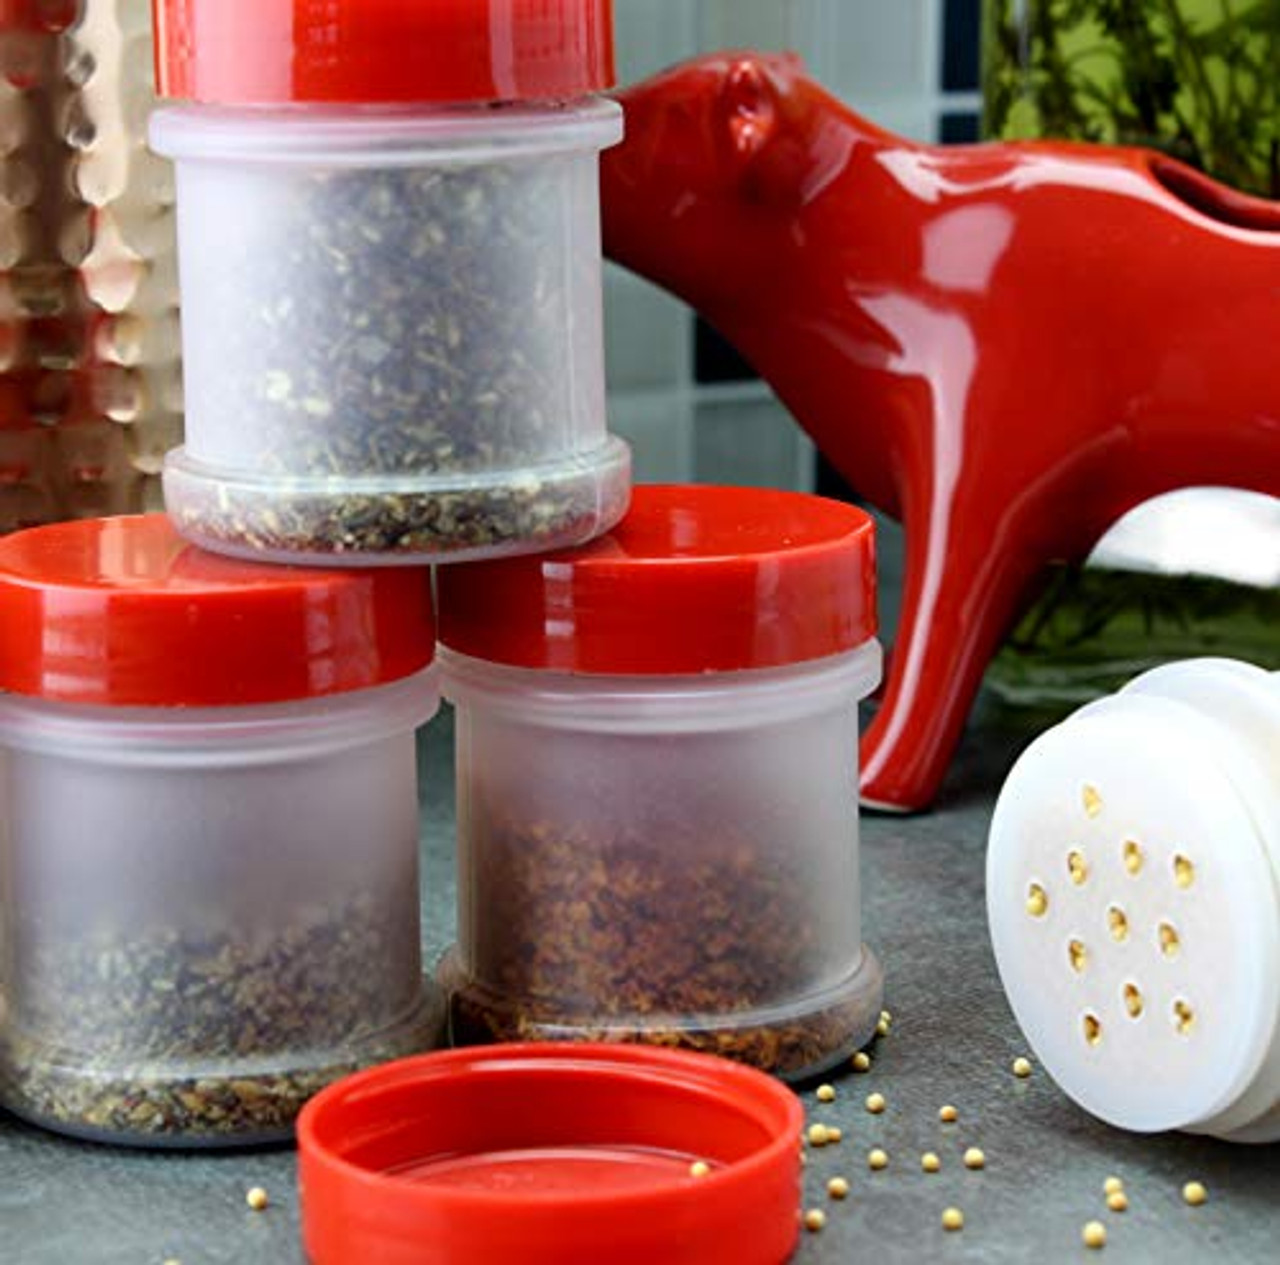 Spice Jar Pet, Red Cap W Sifter - 7 oz